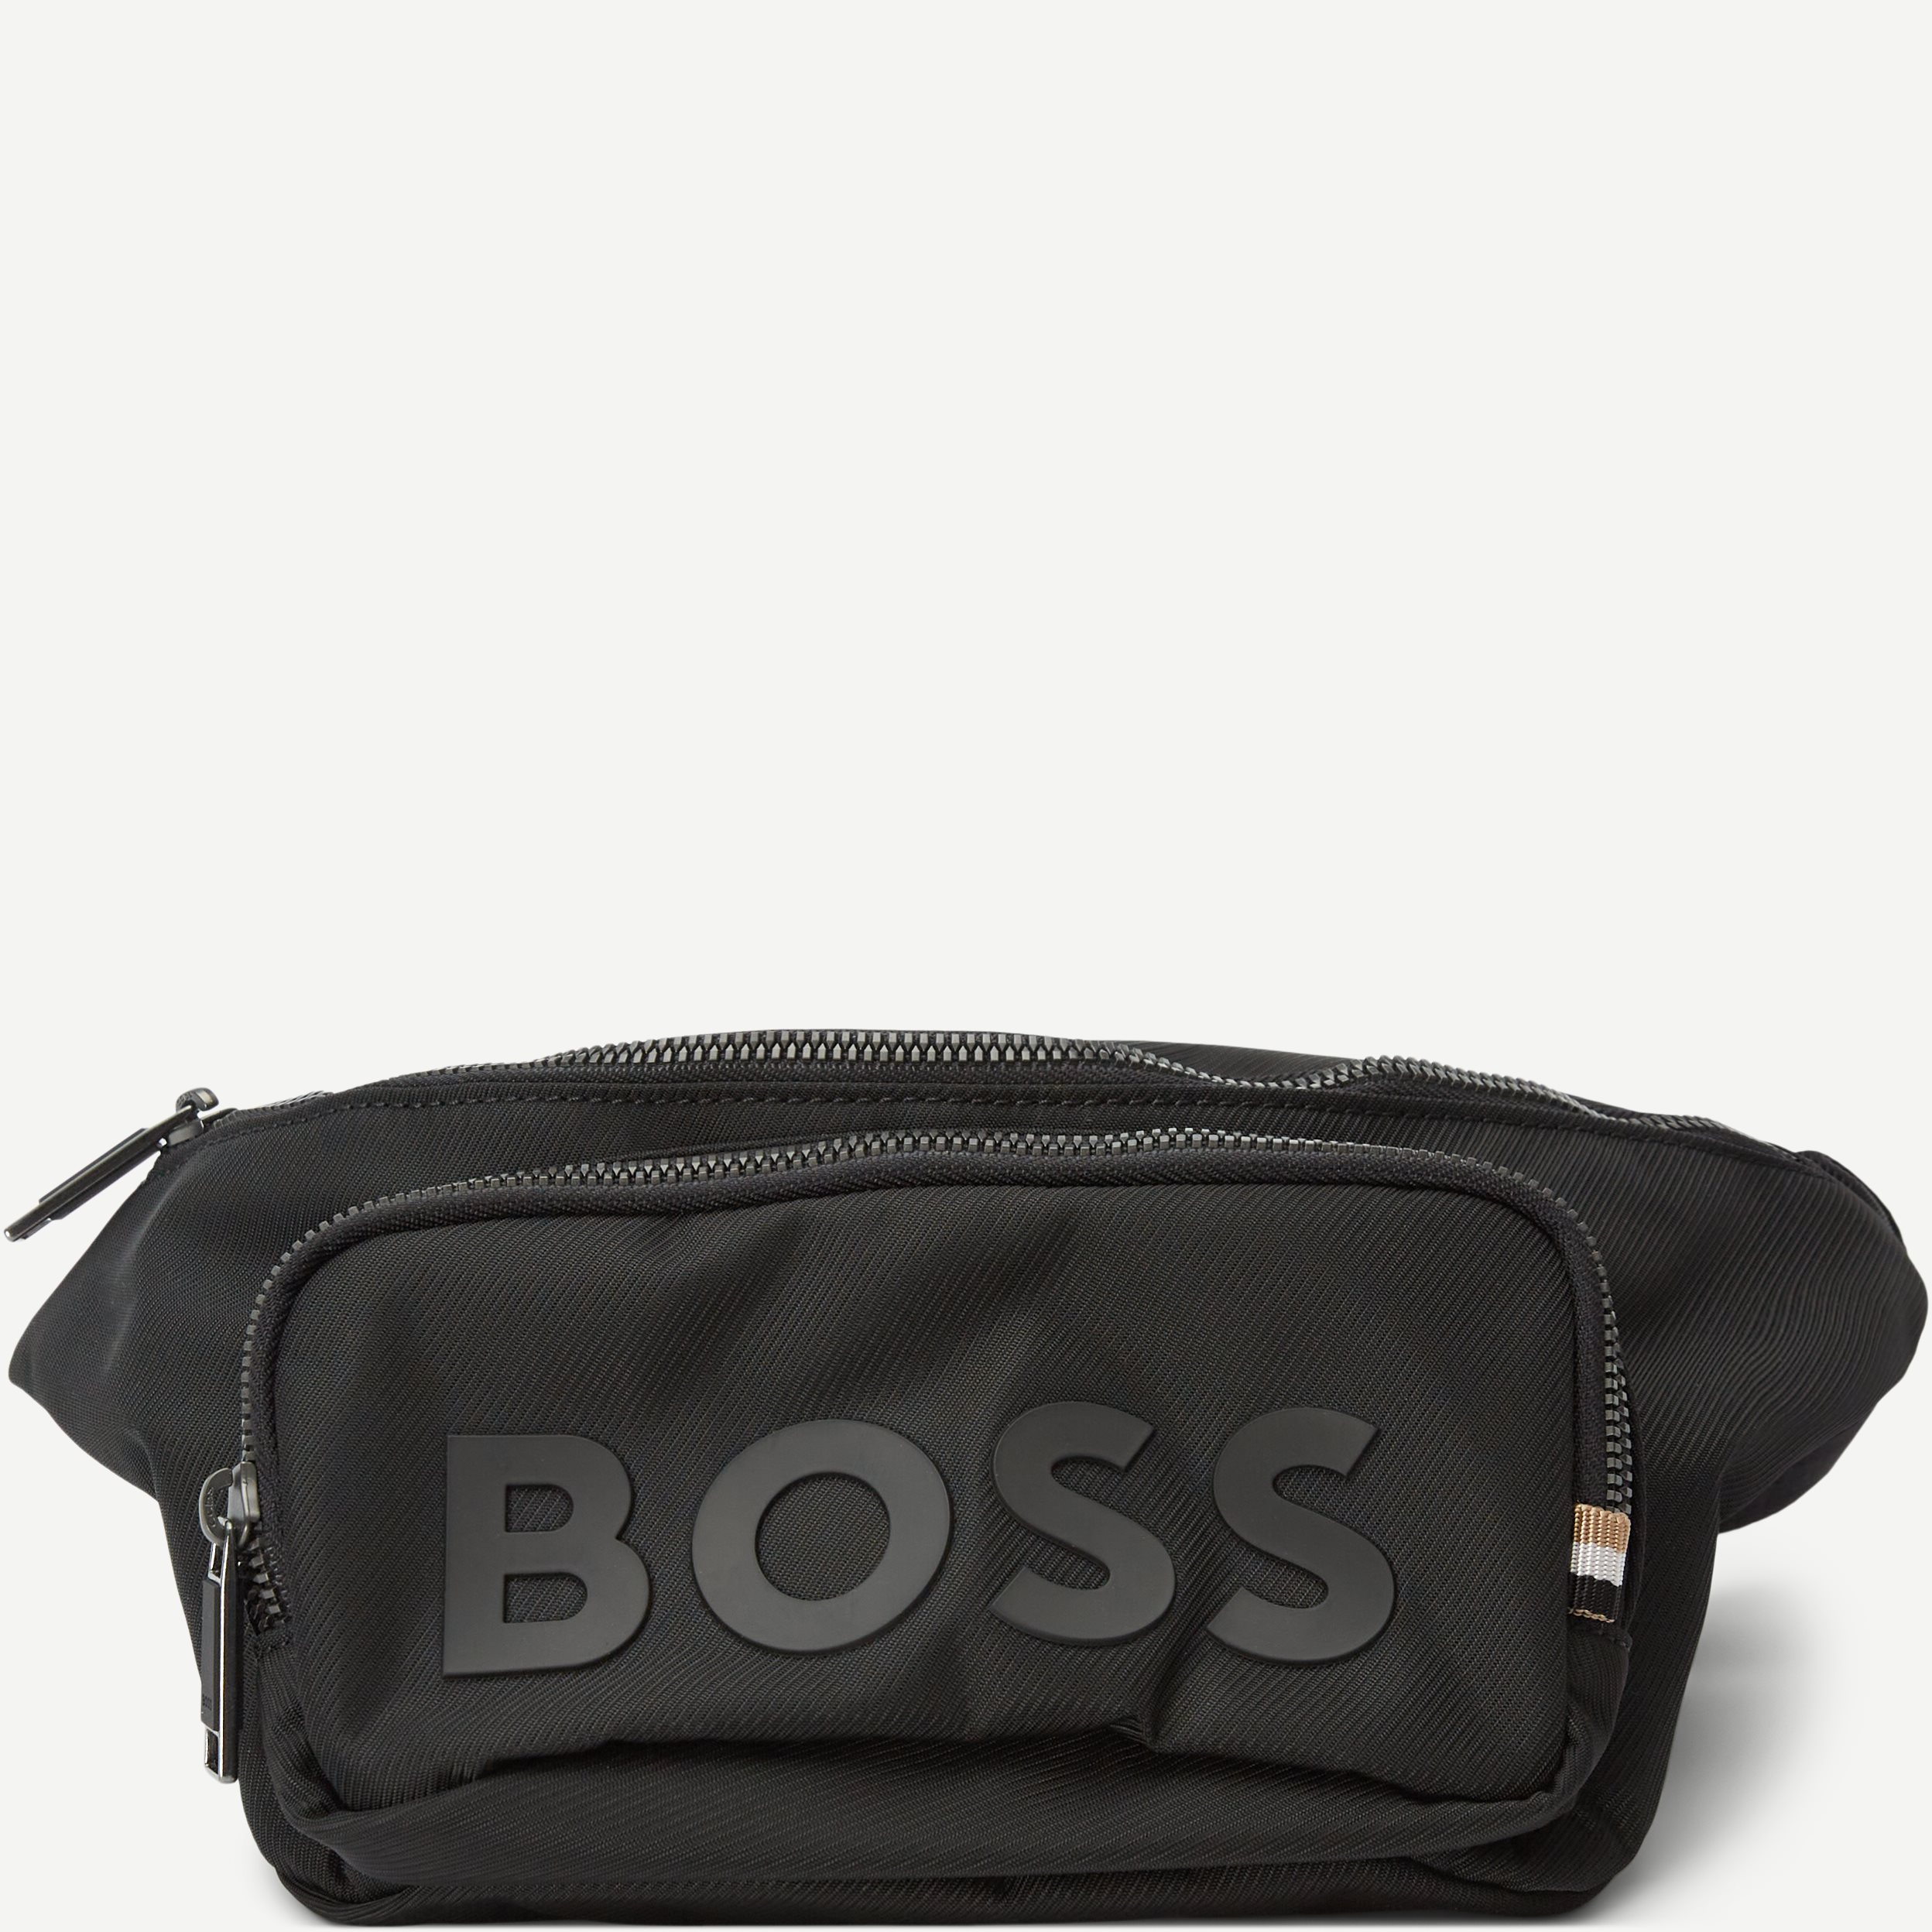 Hugo Boss bags